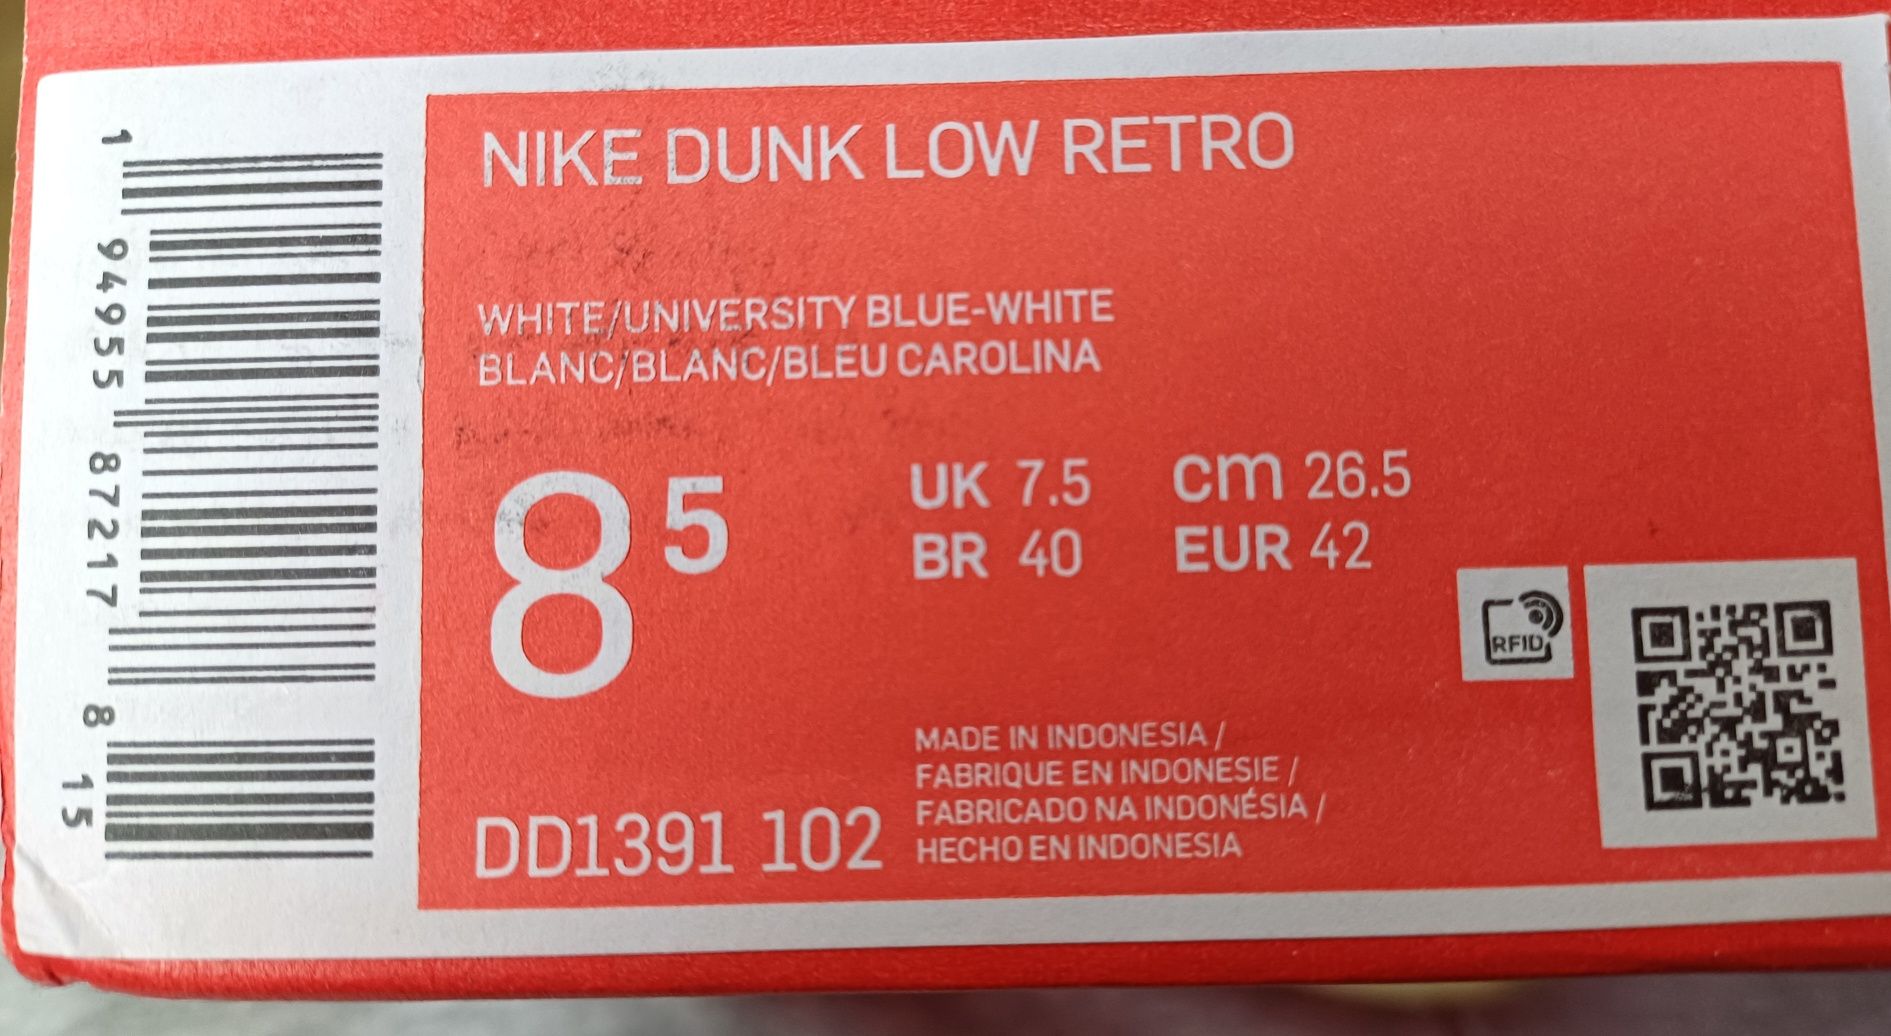 Nike dunk low retro university blue-white blanc